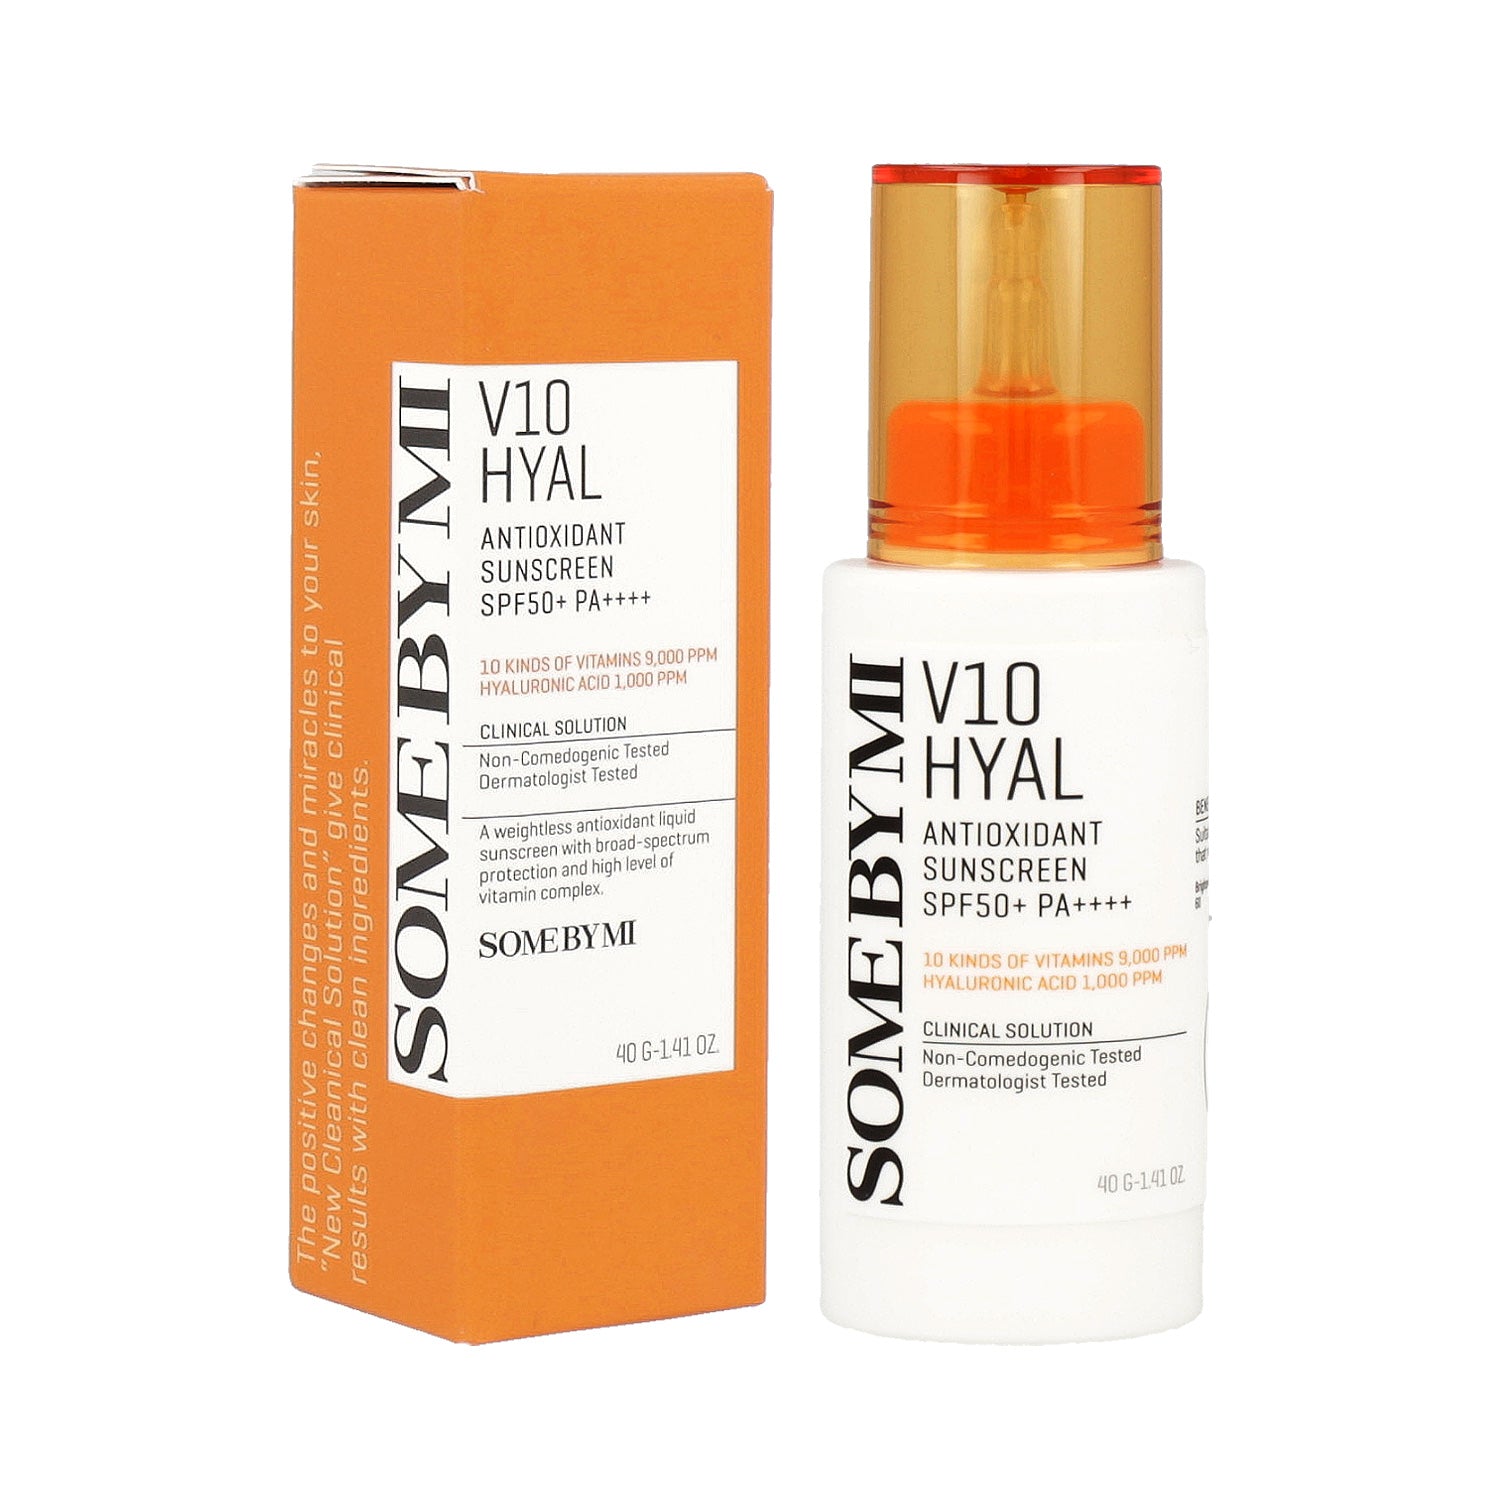 SOME BY MI V10 Hyal Antioxidant Sunscreen 40ml SPF50+ PA++++ - DODOSKIN